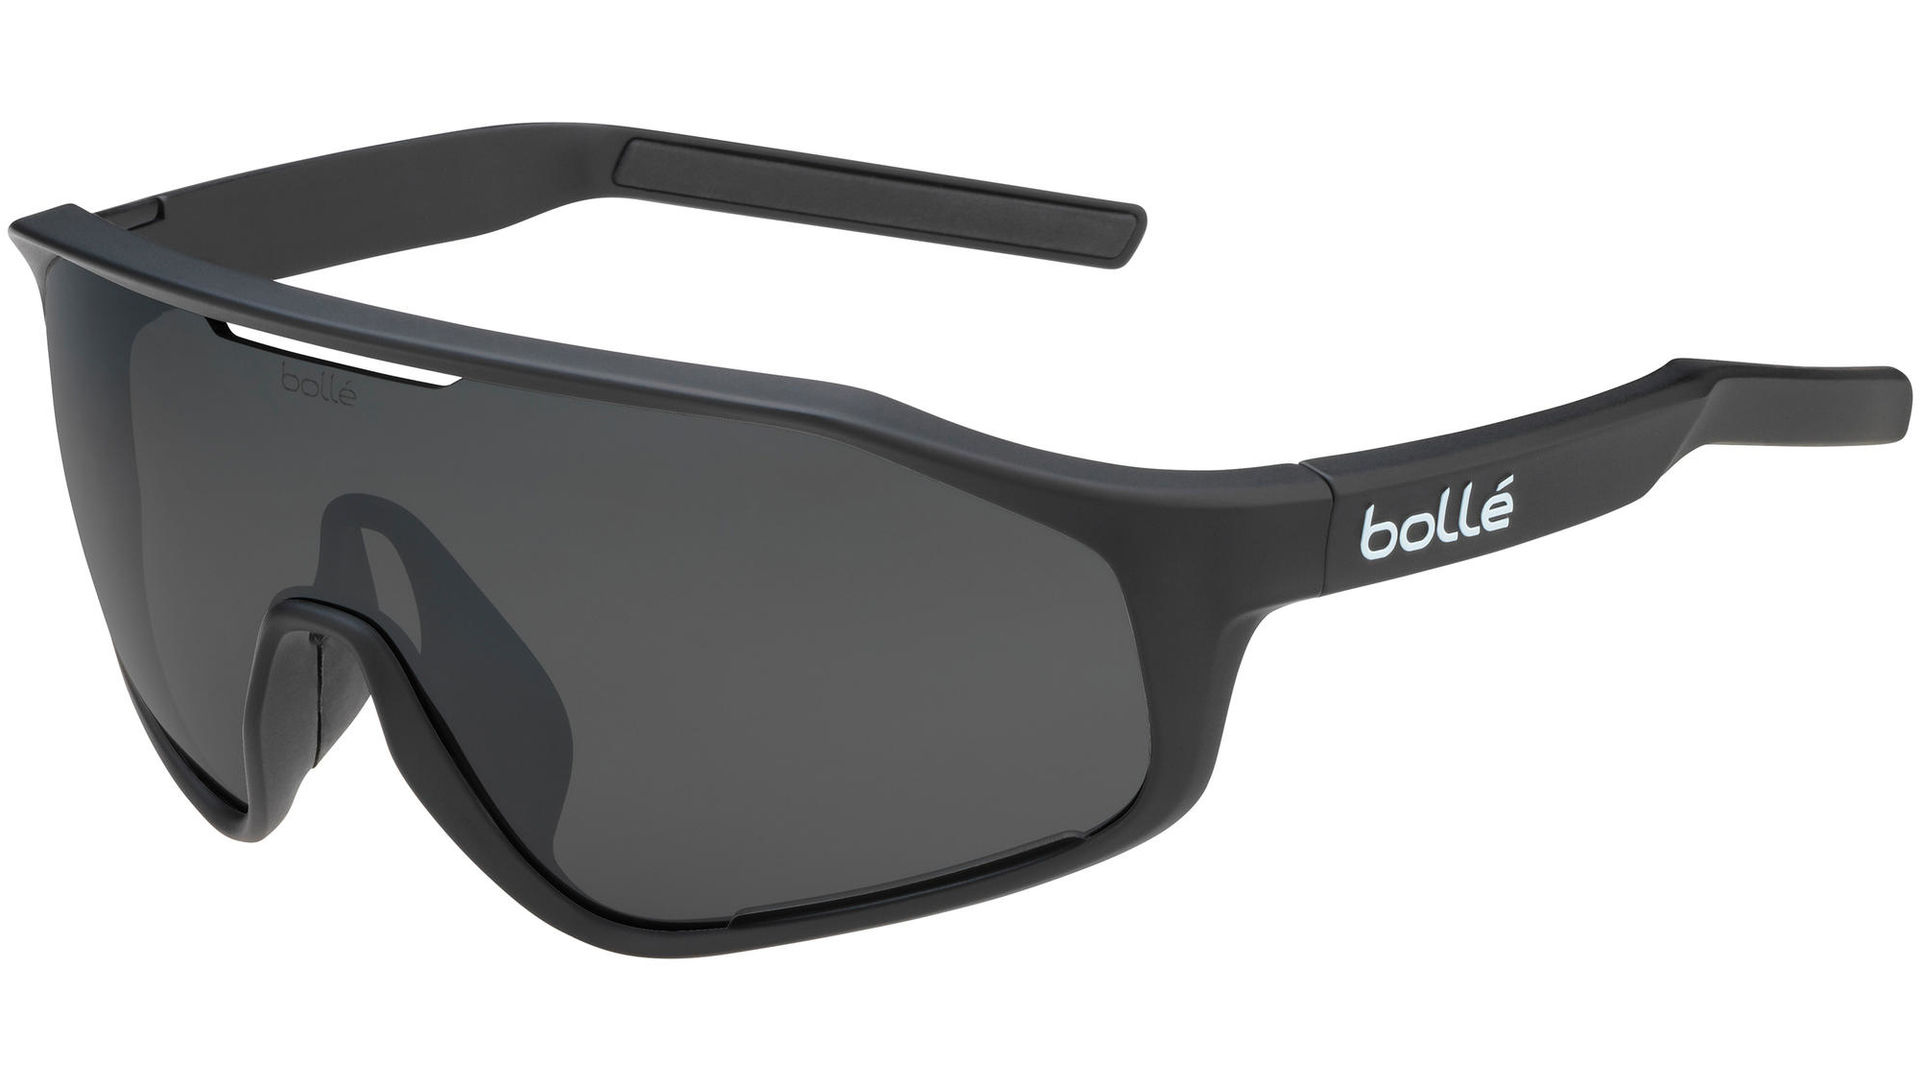 Bollé Radbrille Shifter - black matte